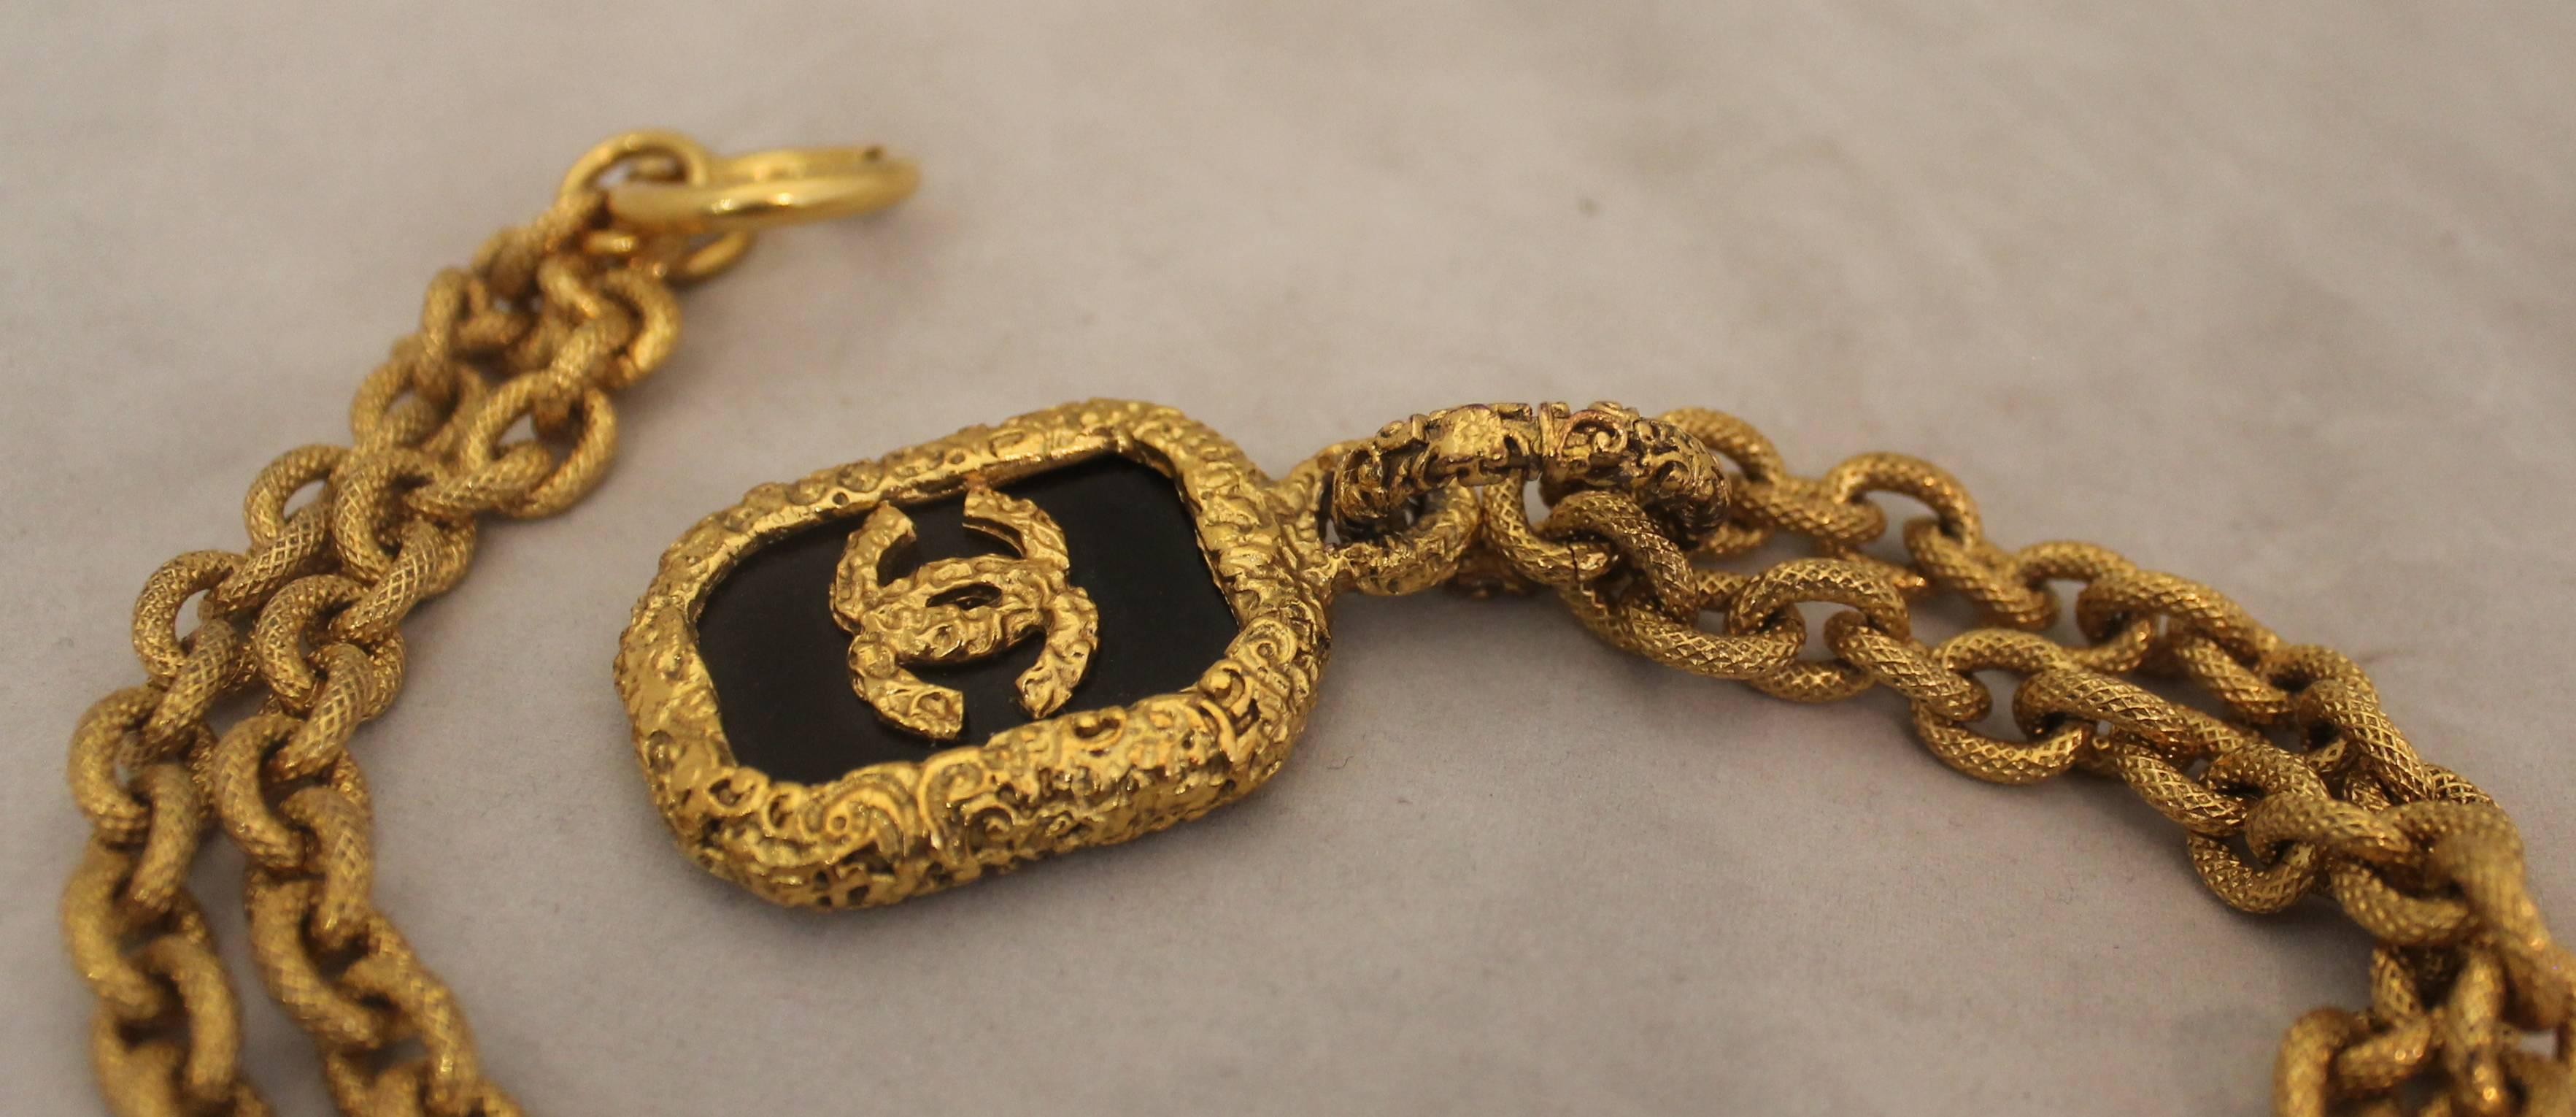 Chanel Goldtone Byzantine Link Necklace with Black Glass Pendant  - Circa 96 1